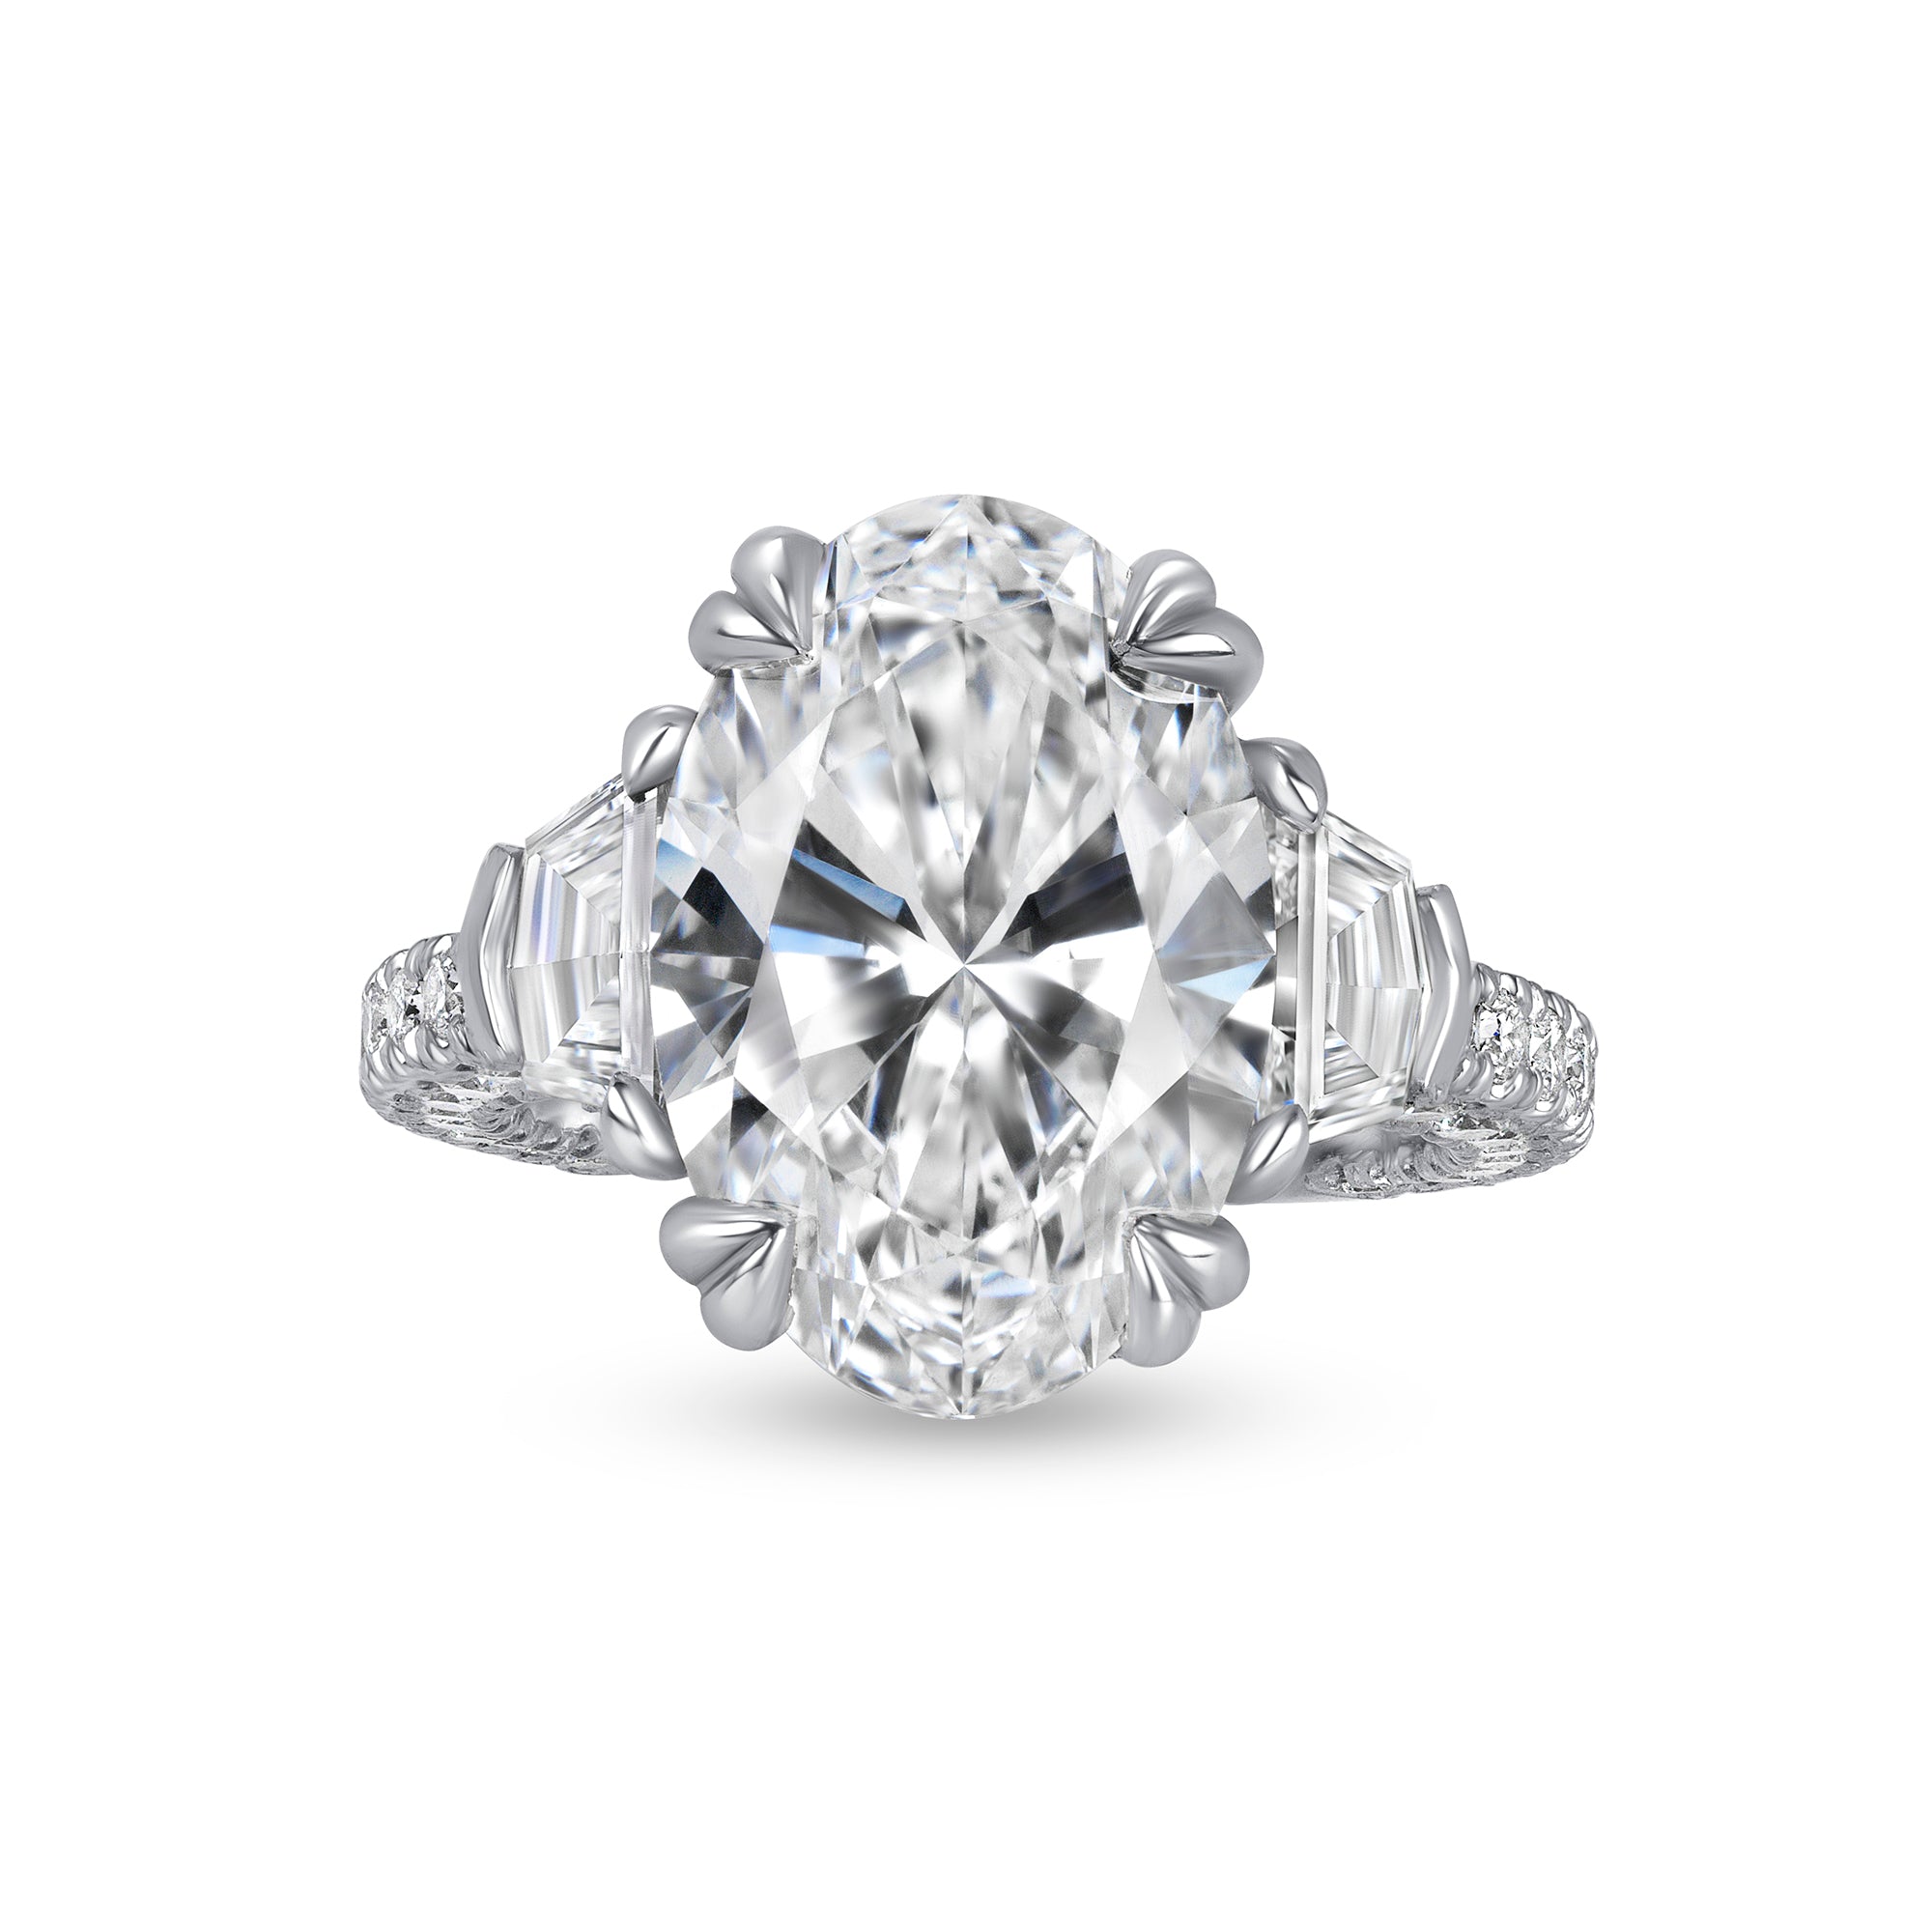 Oval Cut Diamond Three Stone Ring with Trapezoid Cut Diamond Side Stones in Platinum